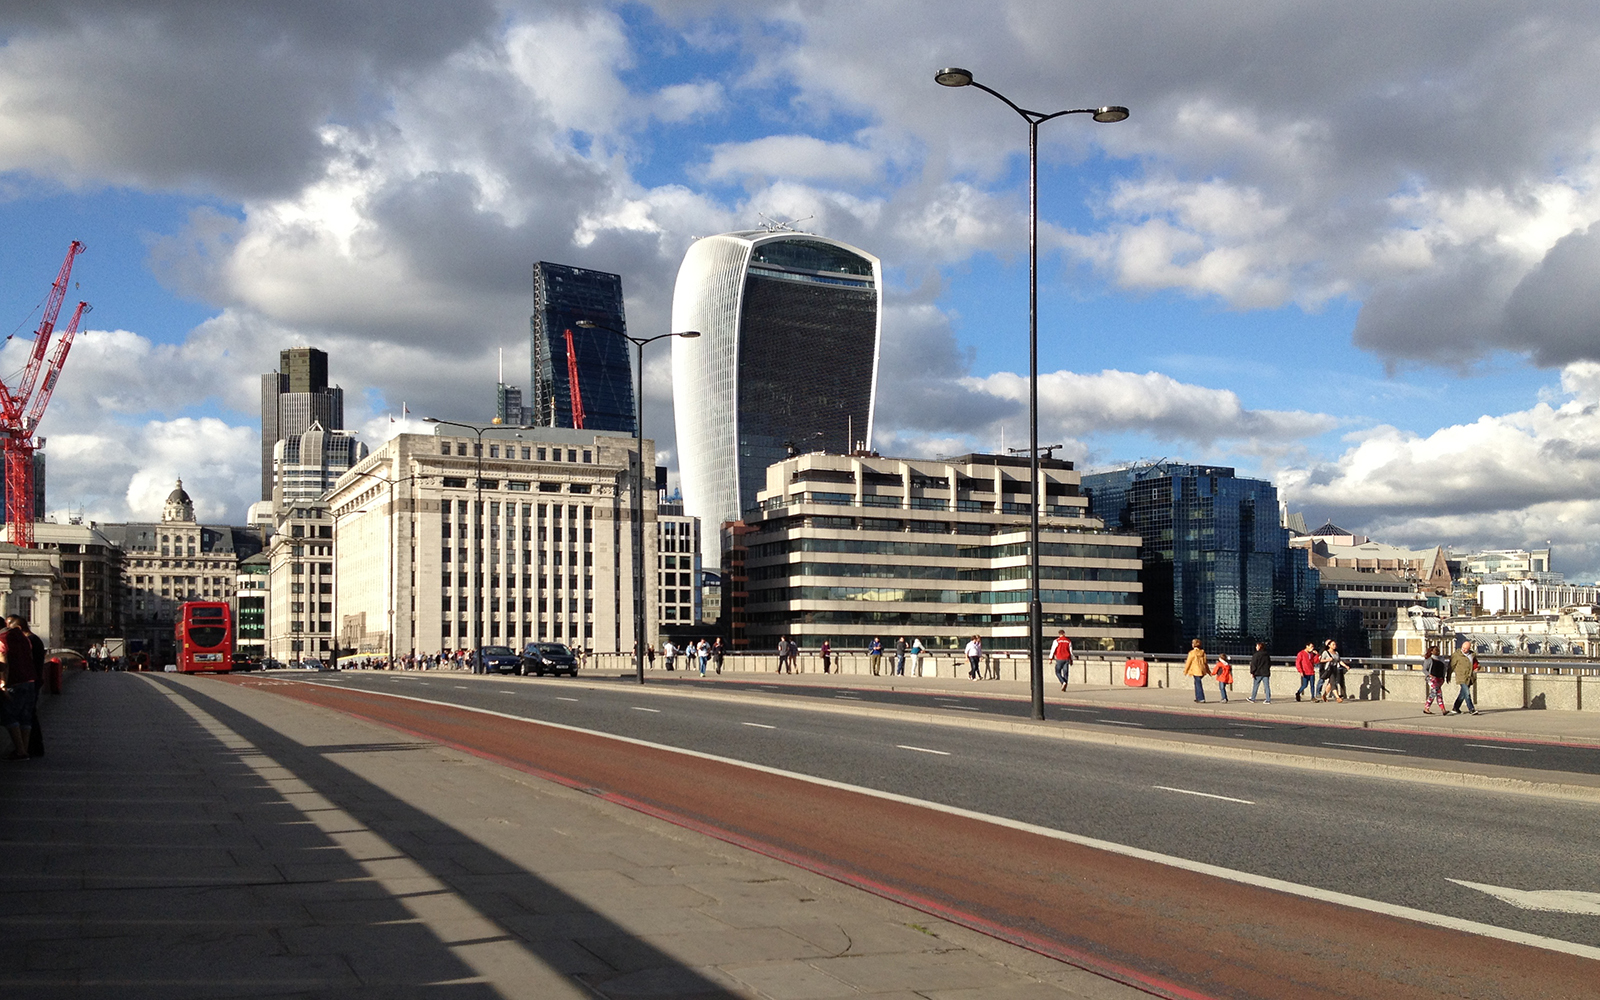 London Bridge 23 August 2015